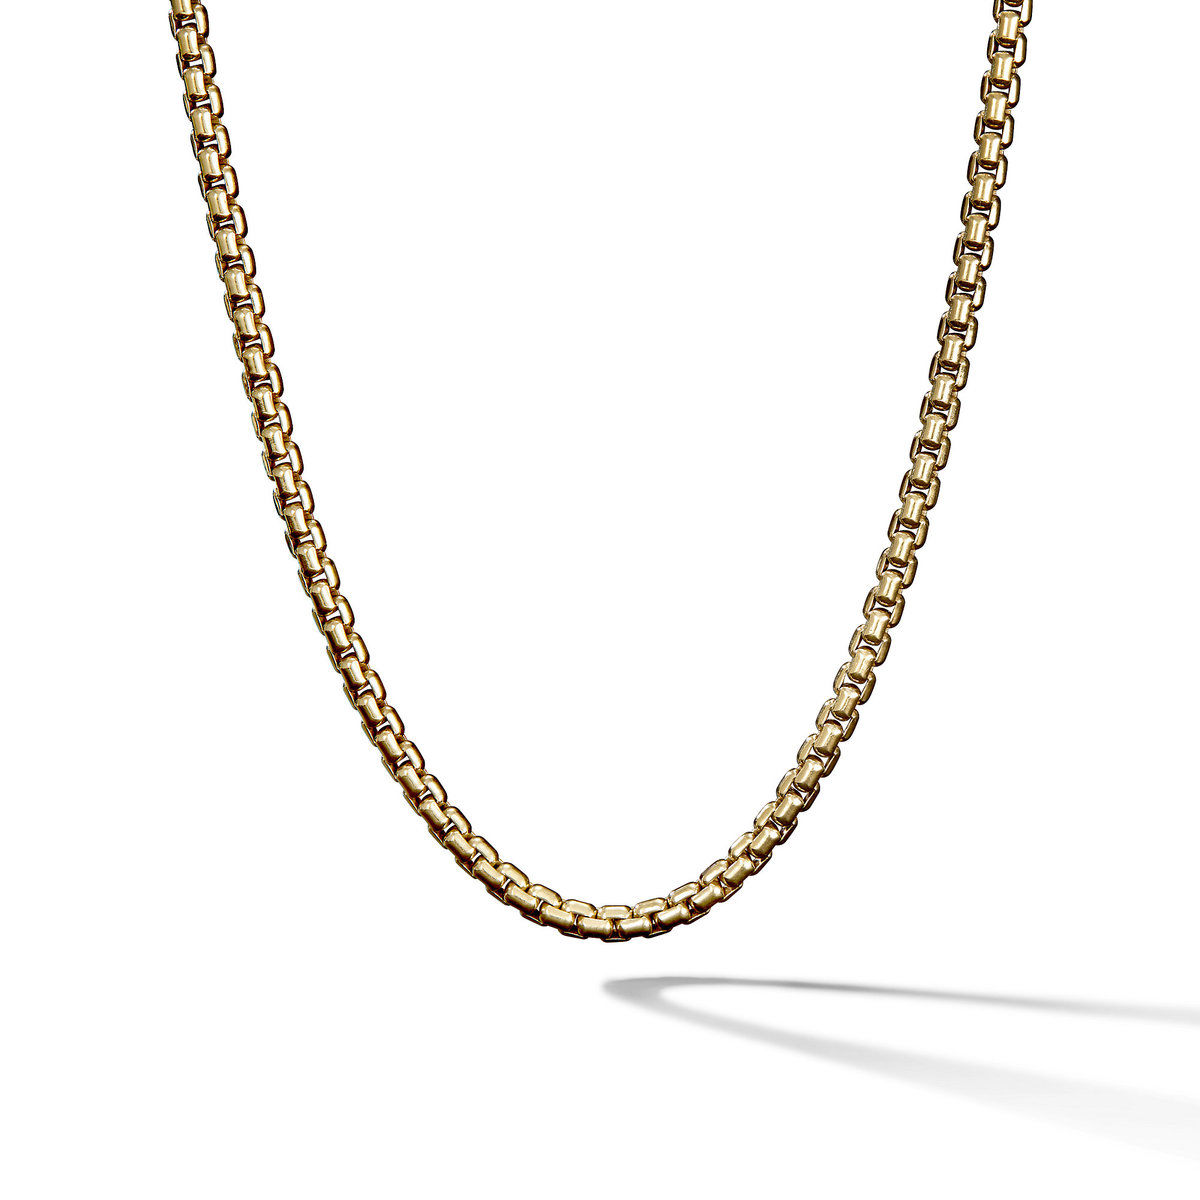 Men's David Yurman Box Chain Necklace in 18k Yellow Gold, 3.6mm - 24 Inches